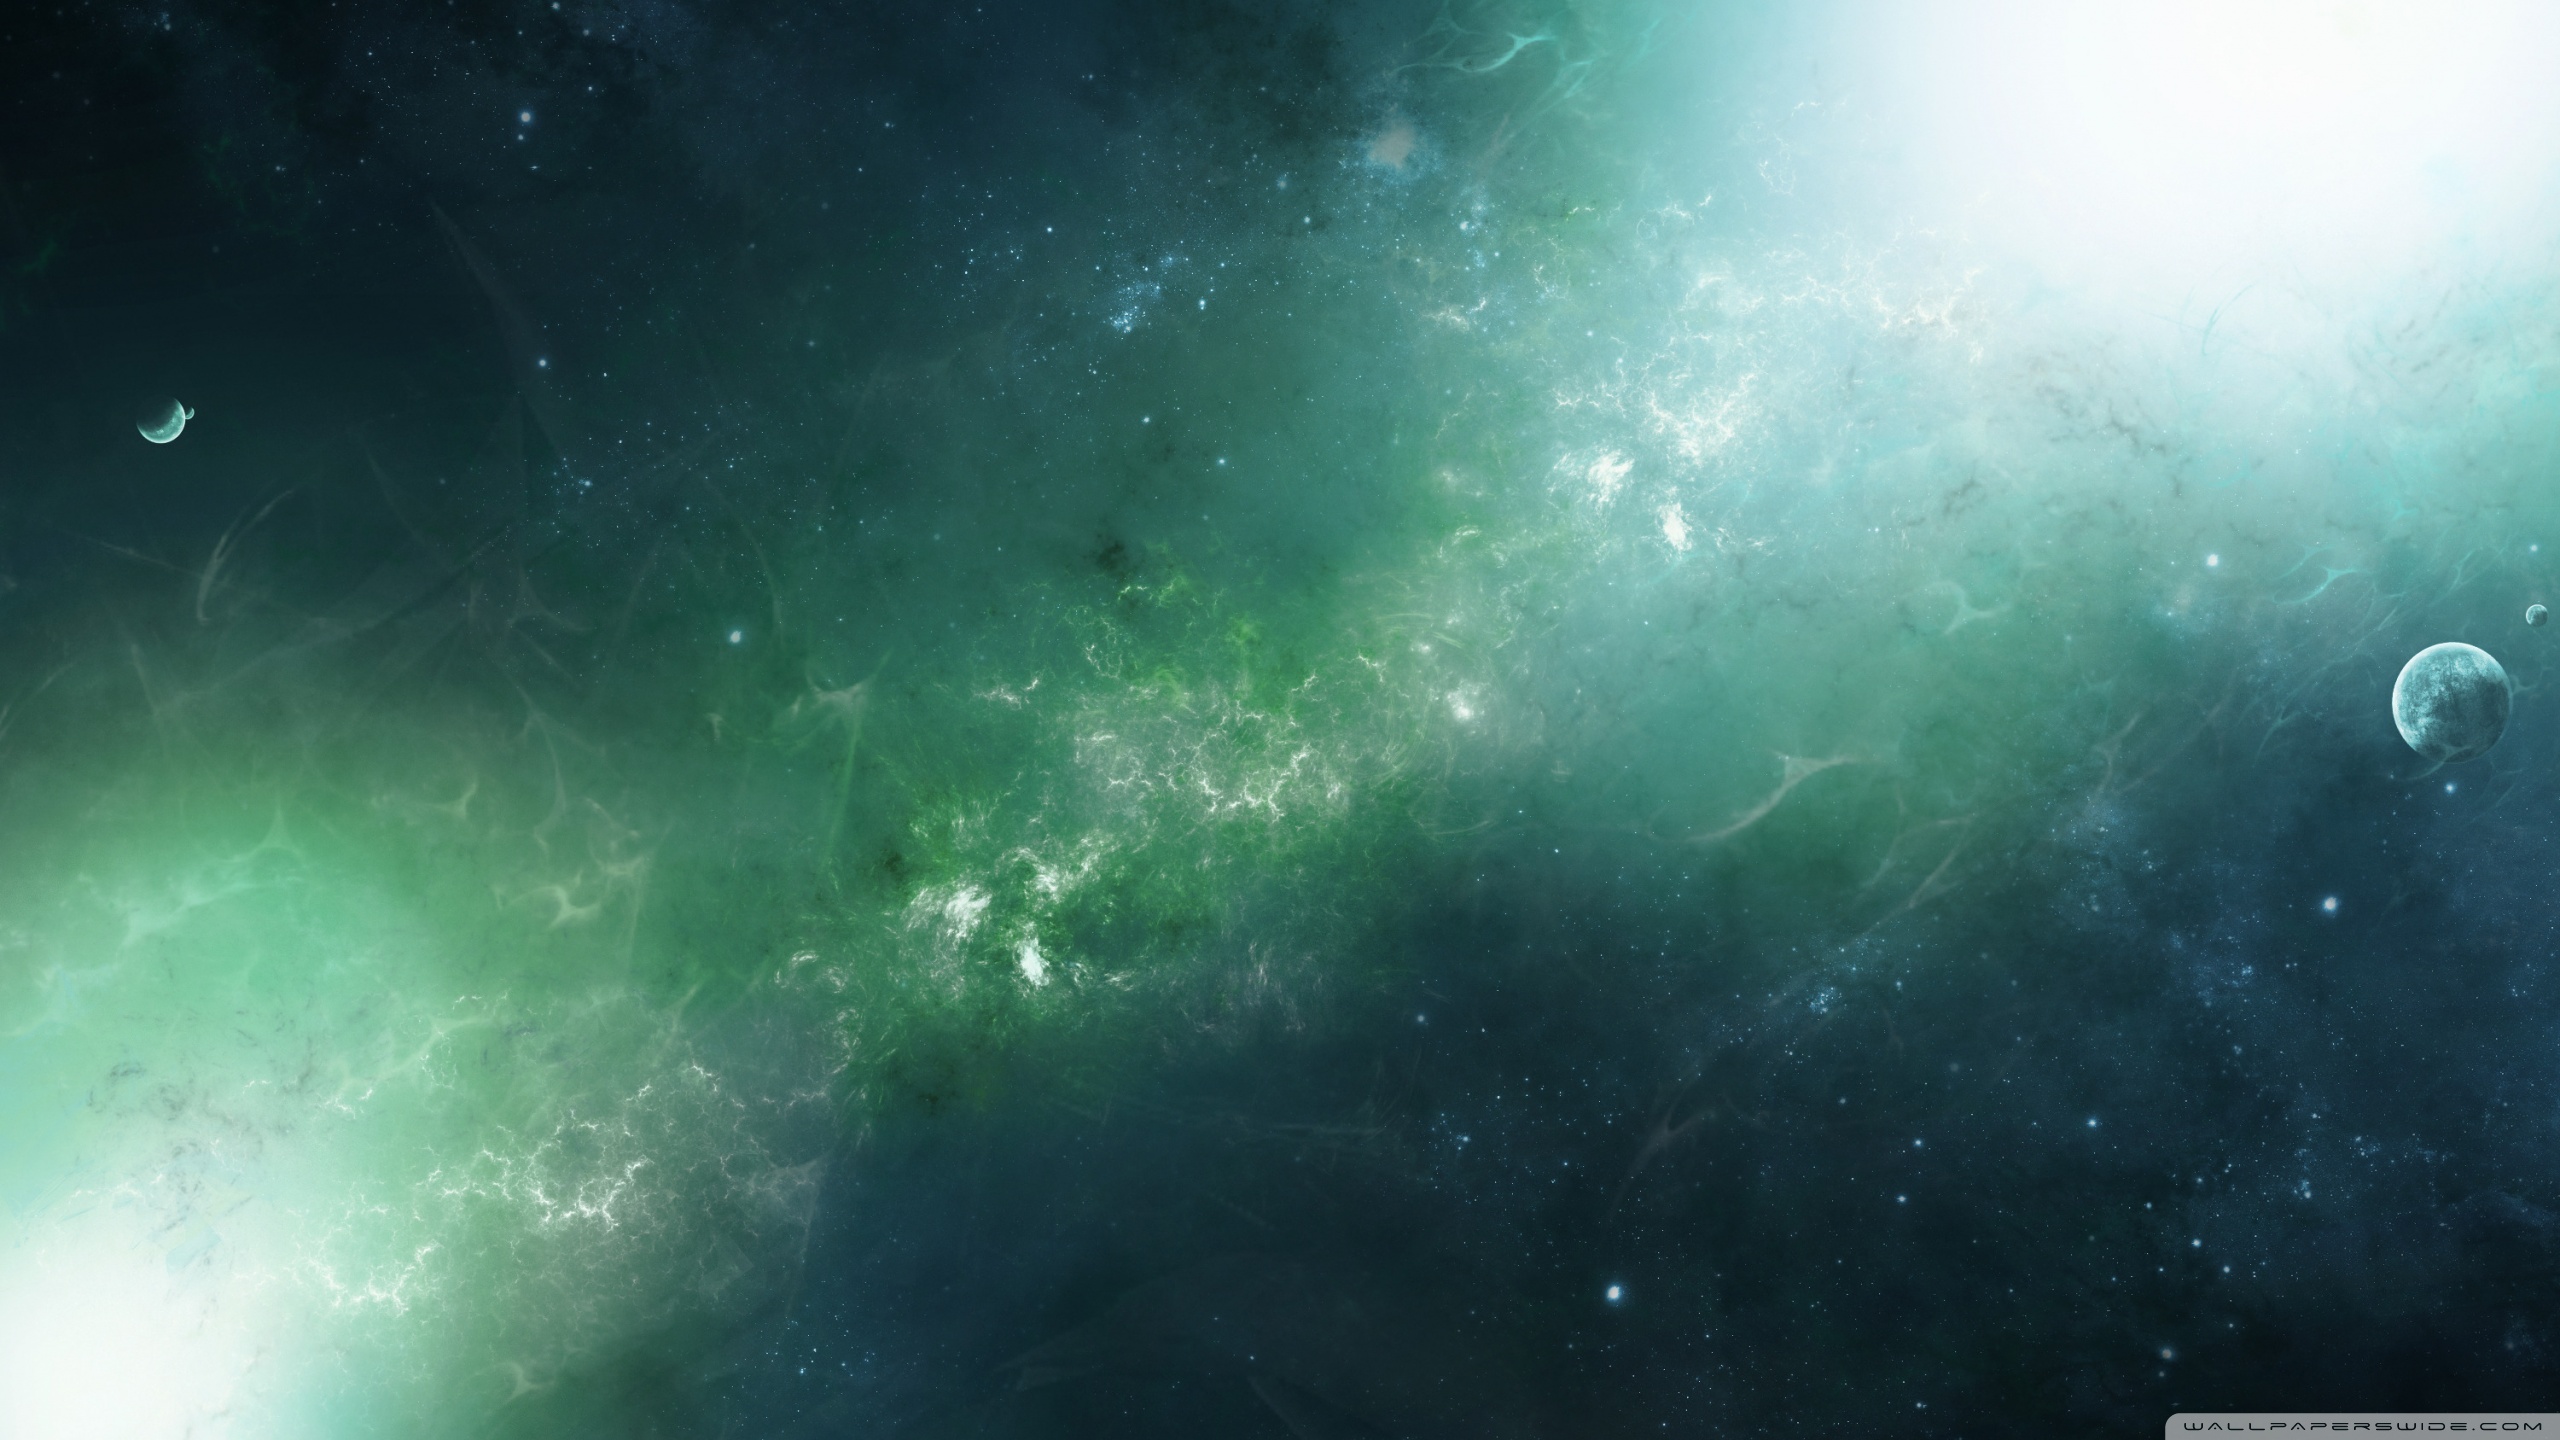 Green Nebula Ultra Hd Desktop Background Wallpaper For 4k Uhd Tv